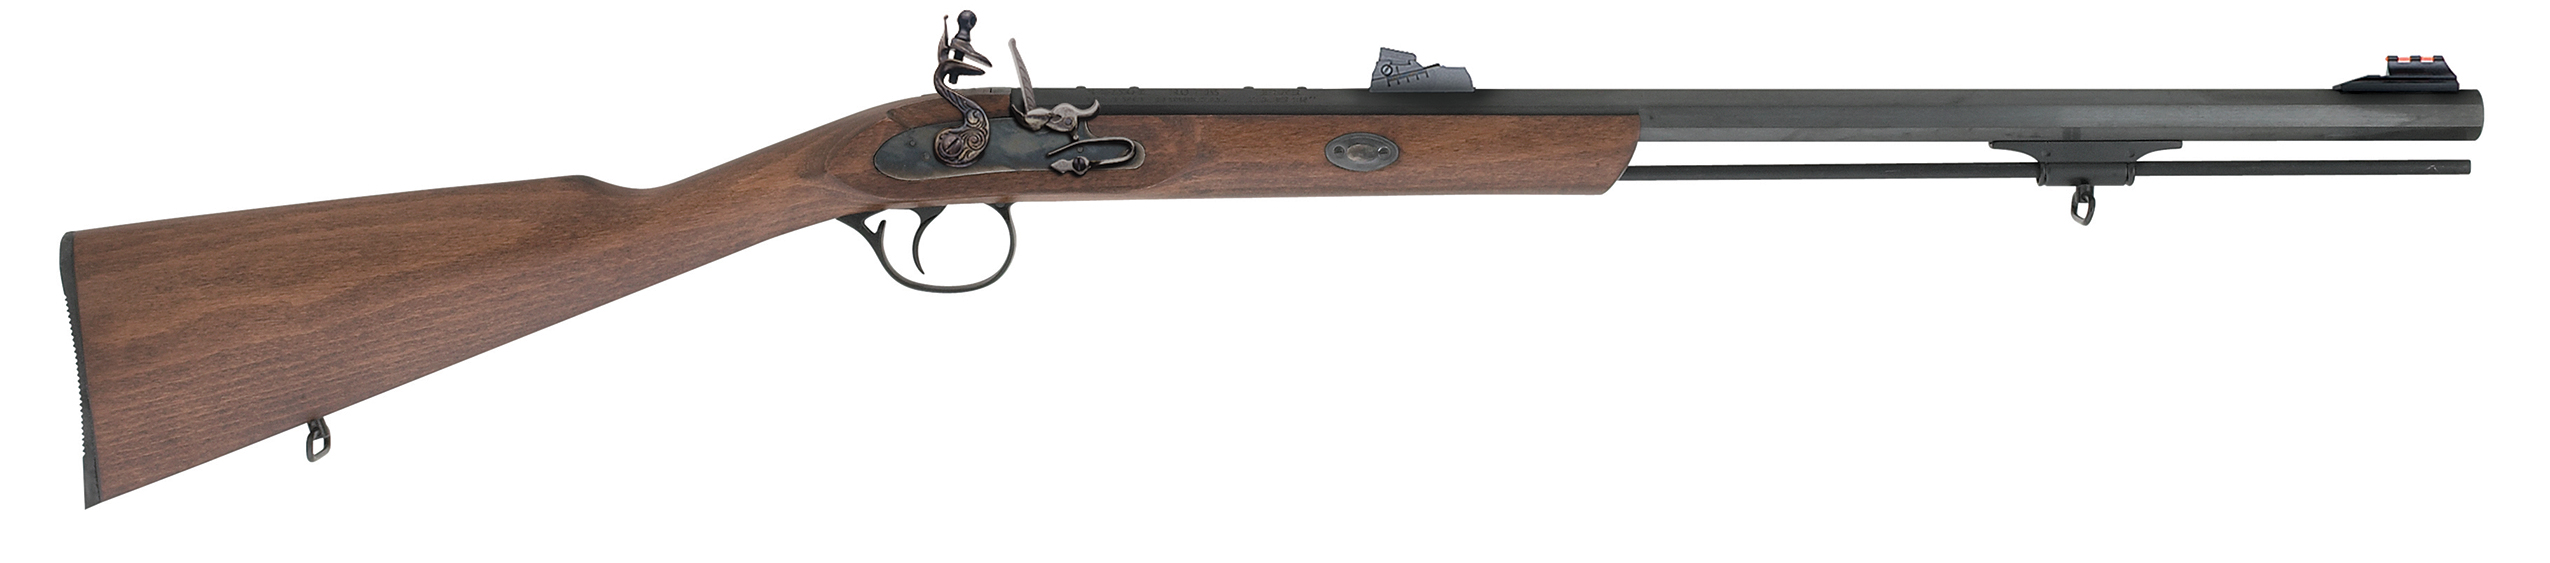 Deerhunter Rifle .50 cal Flintlock Select Hardwood/Blued